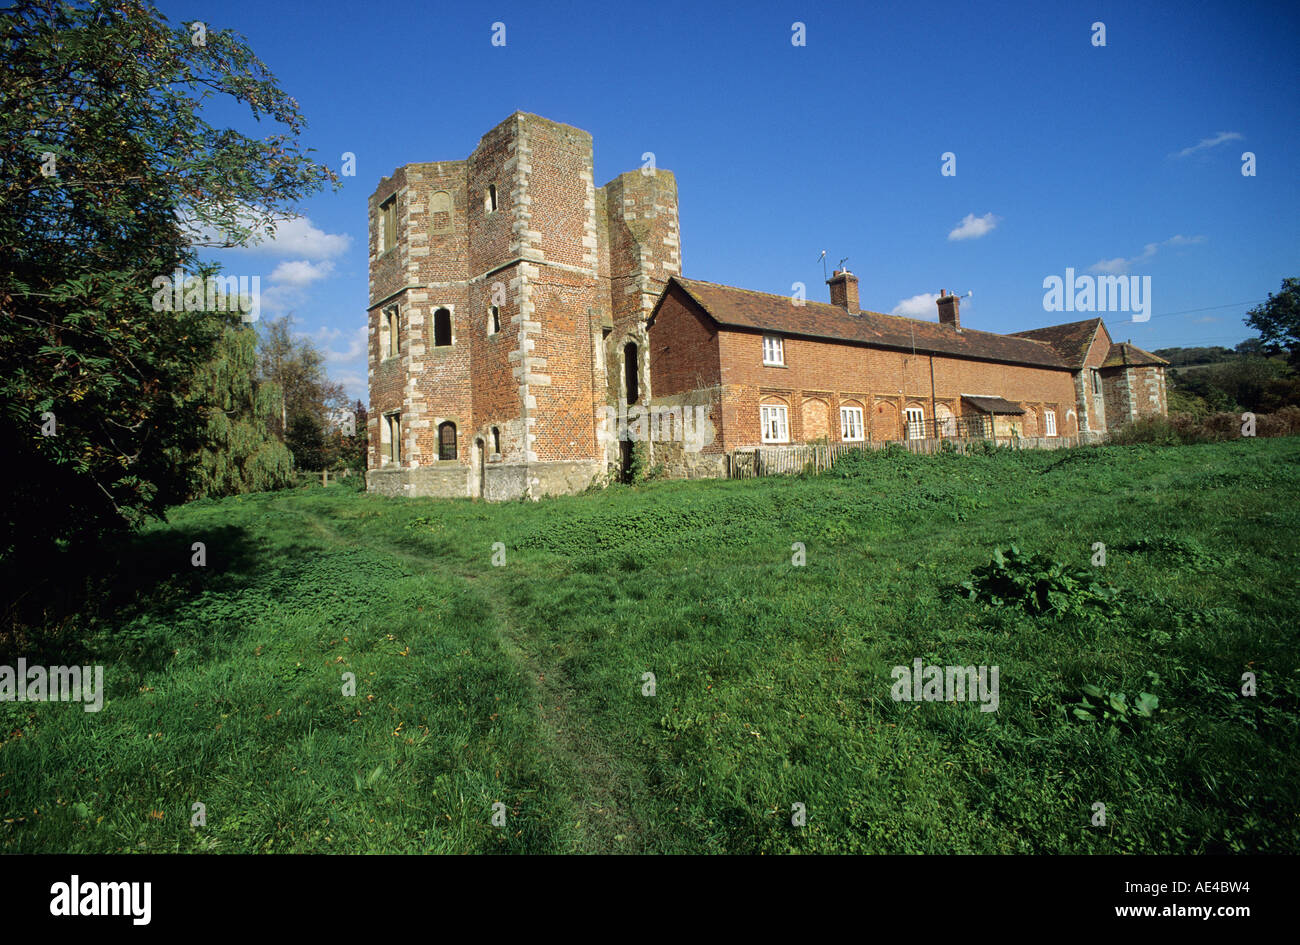 The bishops palace Otford Stock Photo